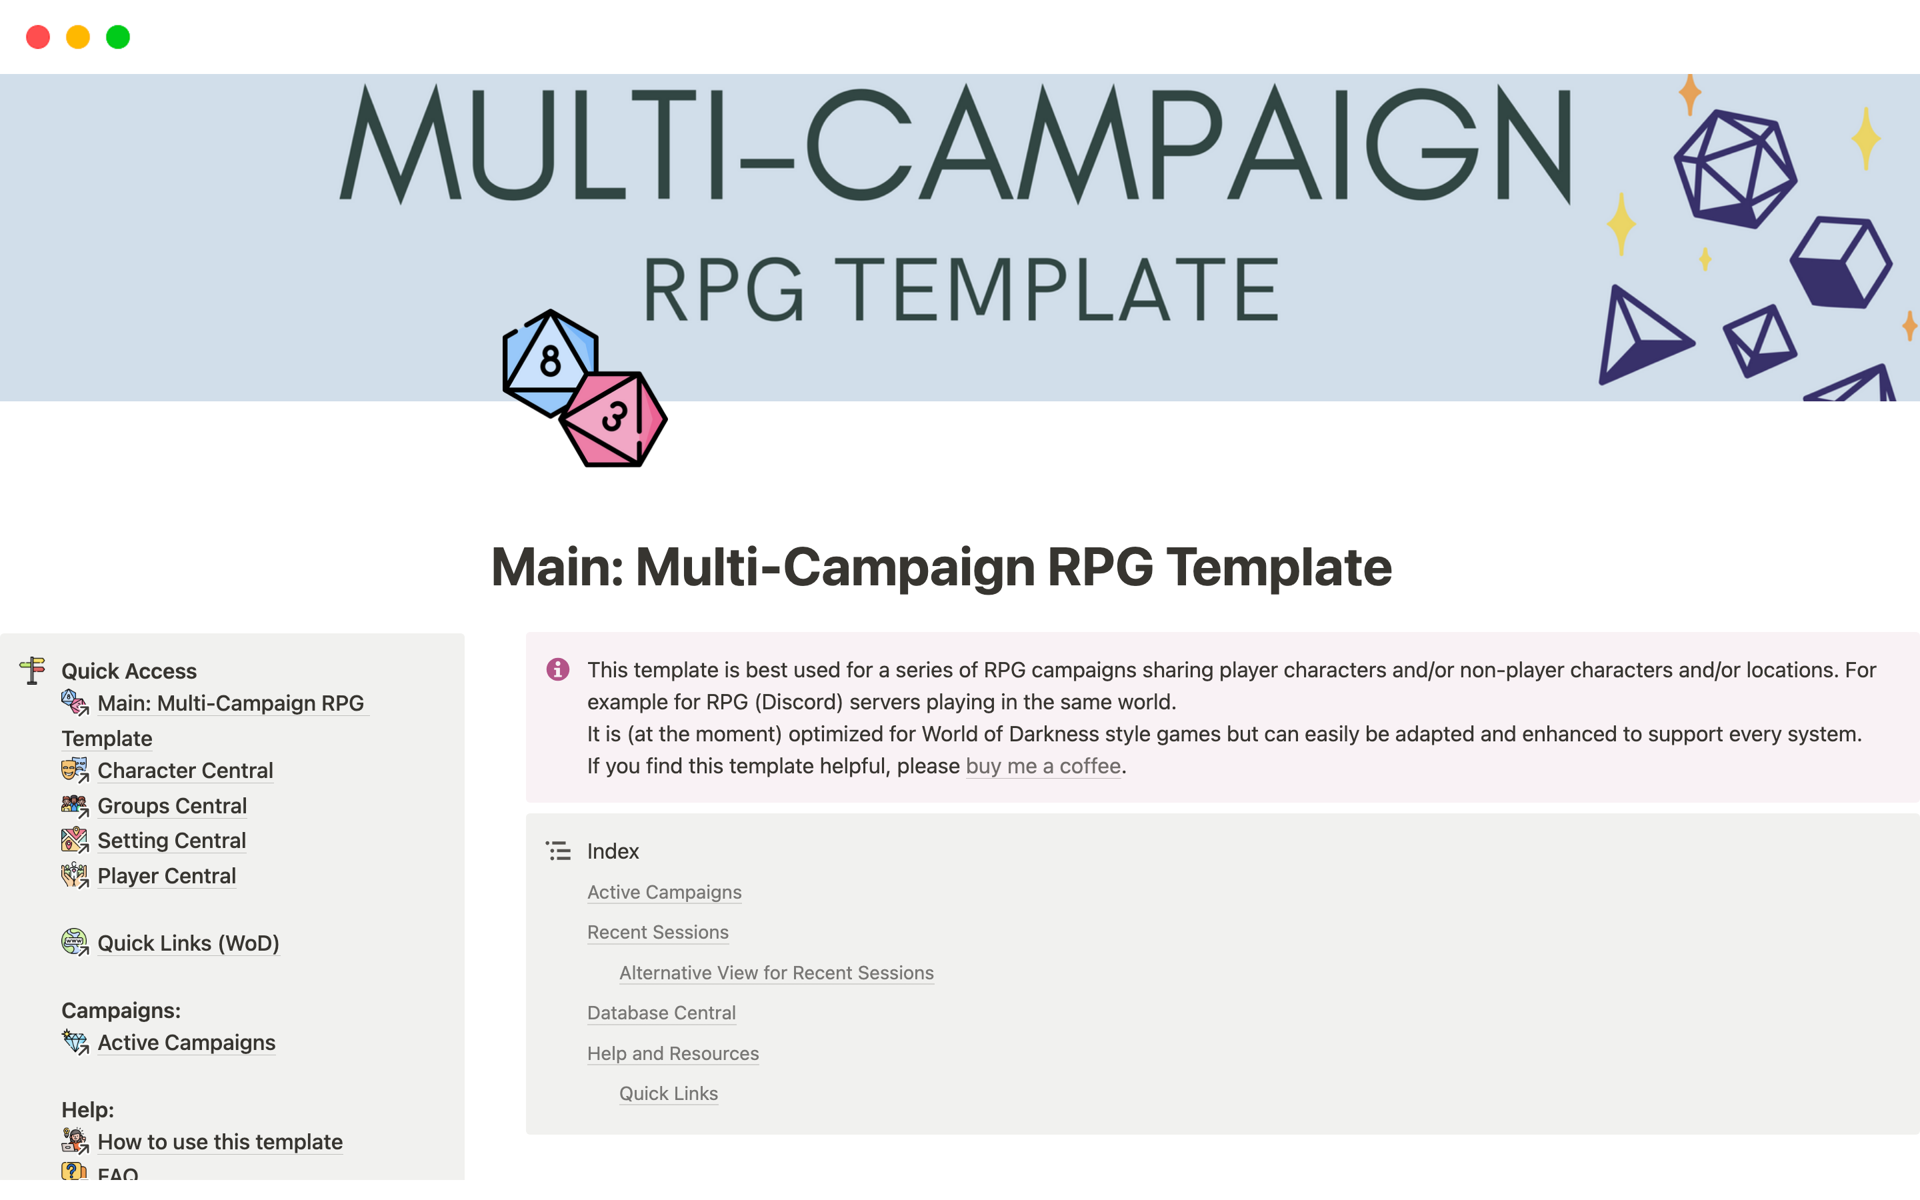 Aperçu du modèle de Multi-Campaign RPG